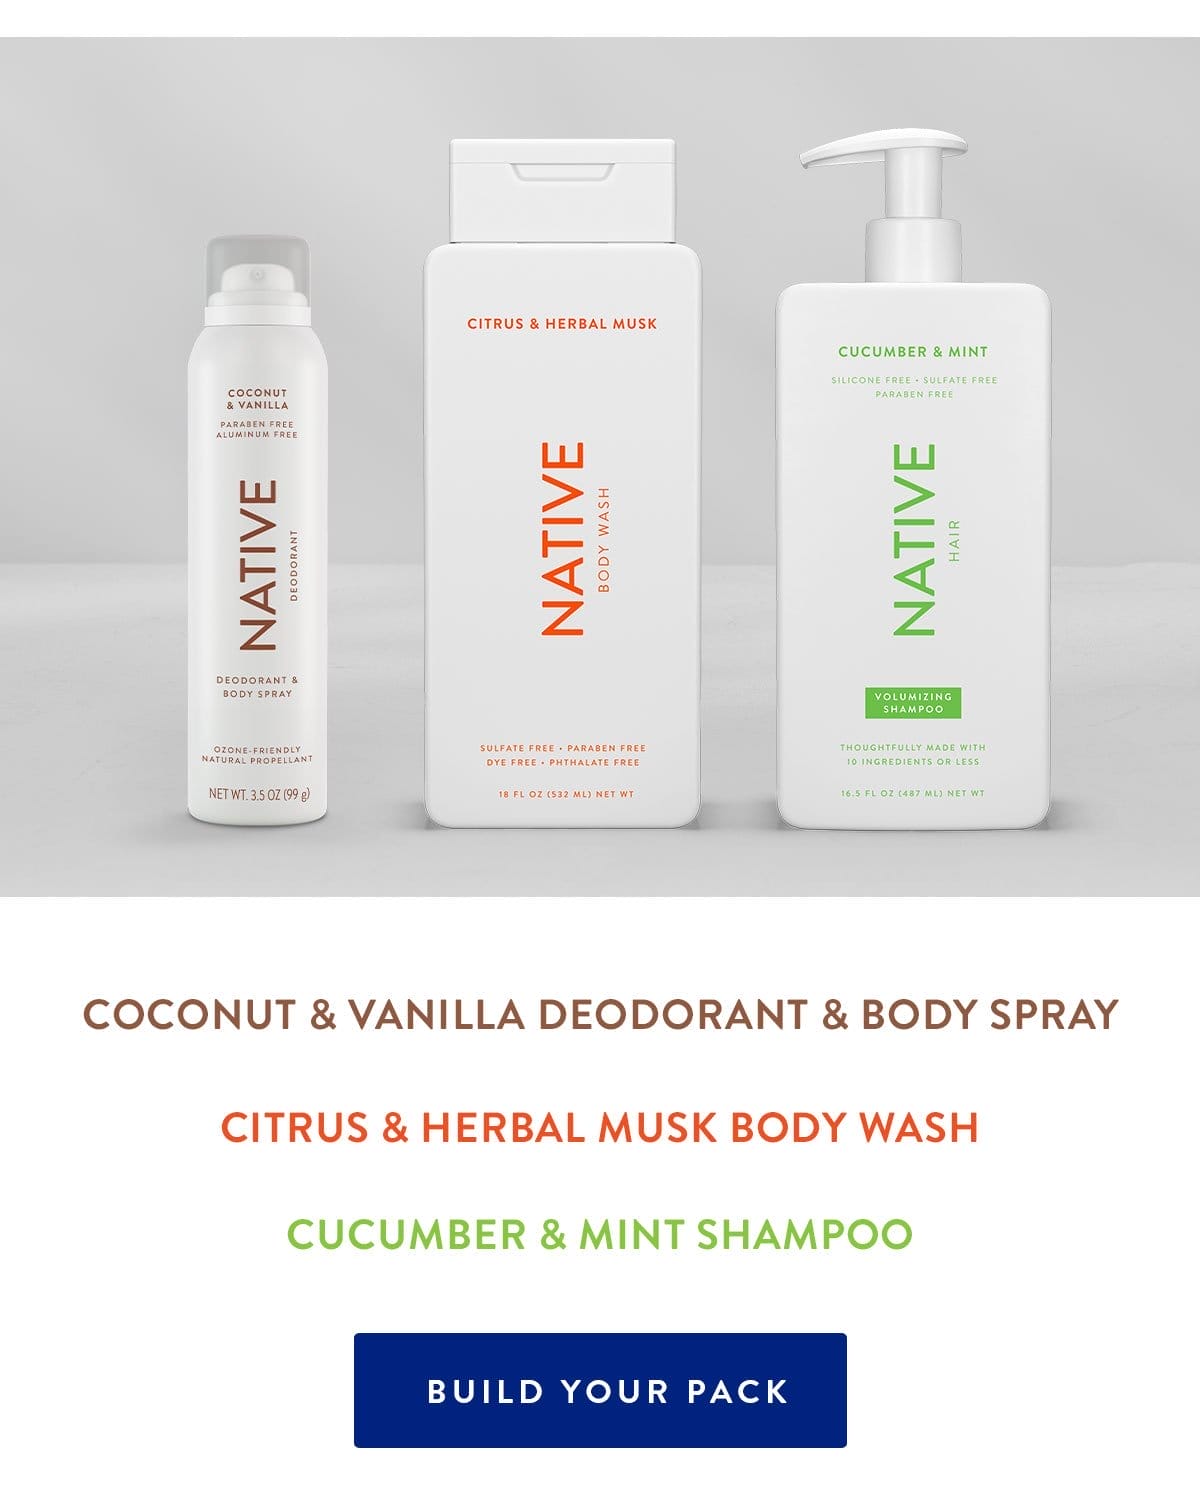 Coconut & Vanilla Deodorant & Body Spray | Citrus & Herbal Musk Body Wash | Cucumber & Mint Shampoo | BUILD YOUR PACK